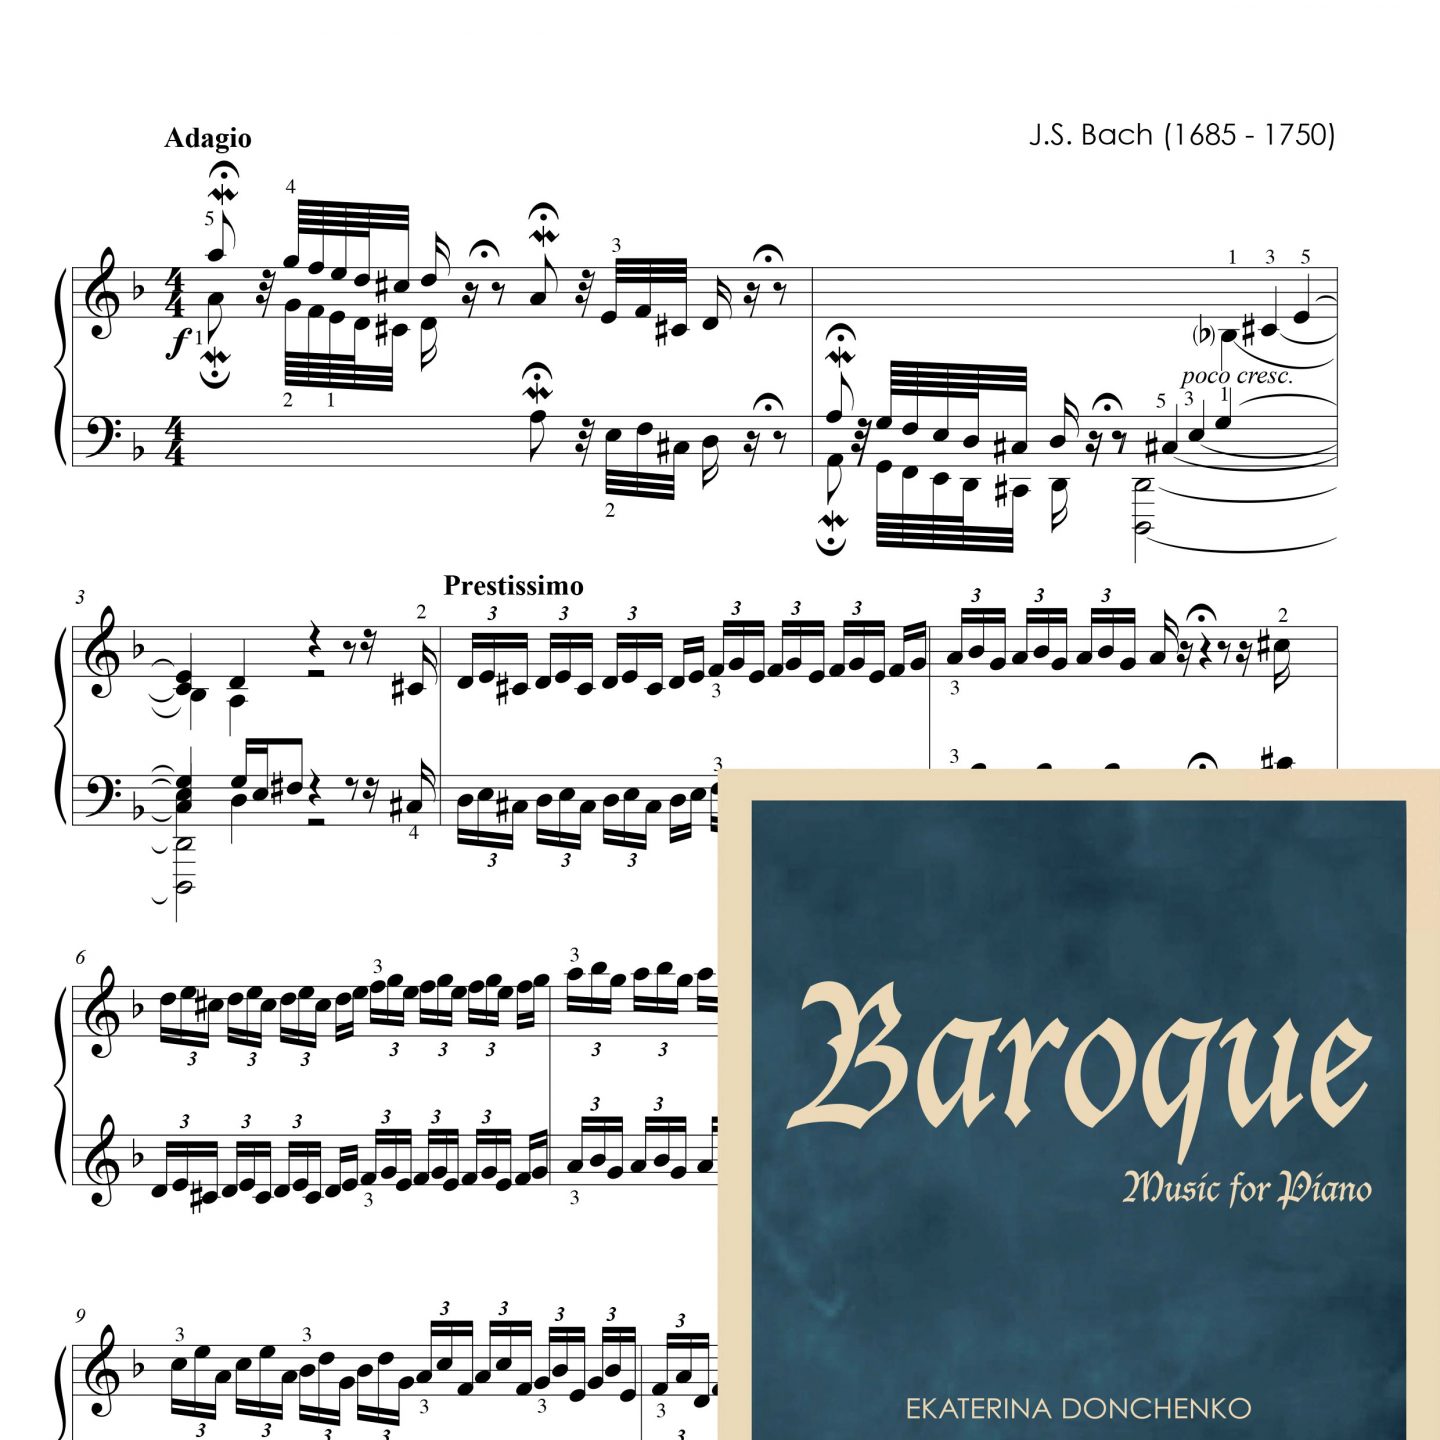 7. Bach, J.S. “Toccata and Fugue”